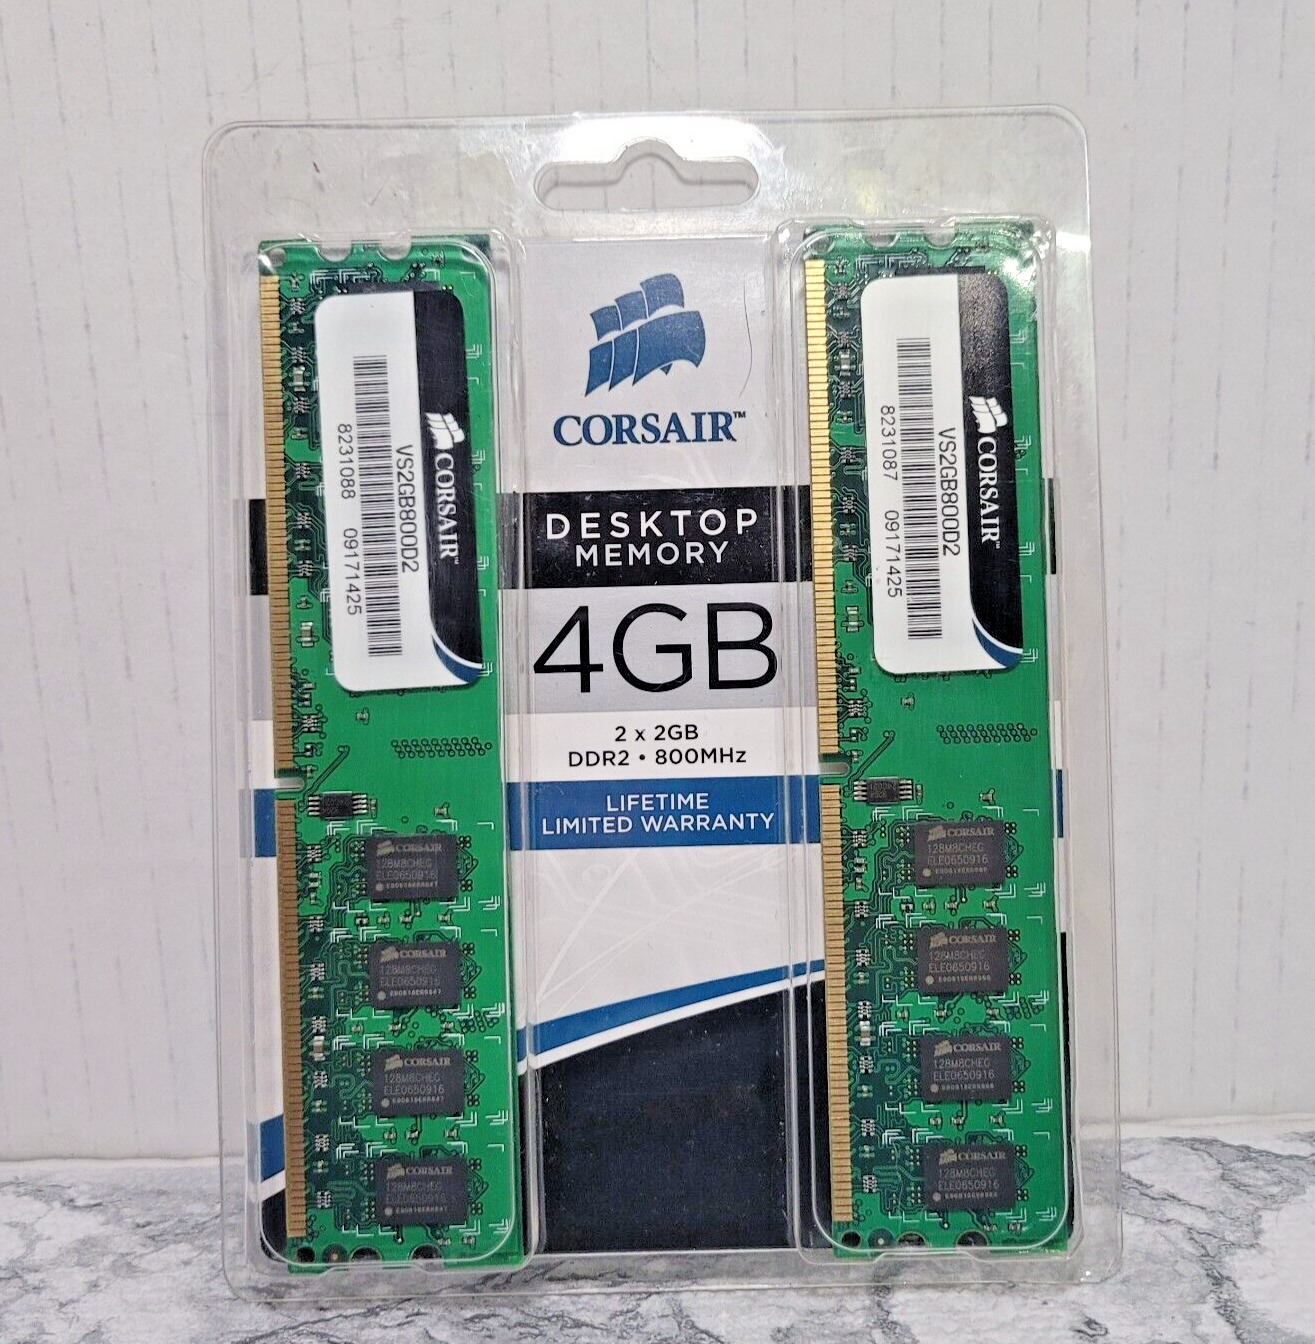 Corsair 2GB DDR 800 MHz Desktop Memory 2 Ram Sticks VS2GB800D2 New